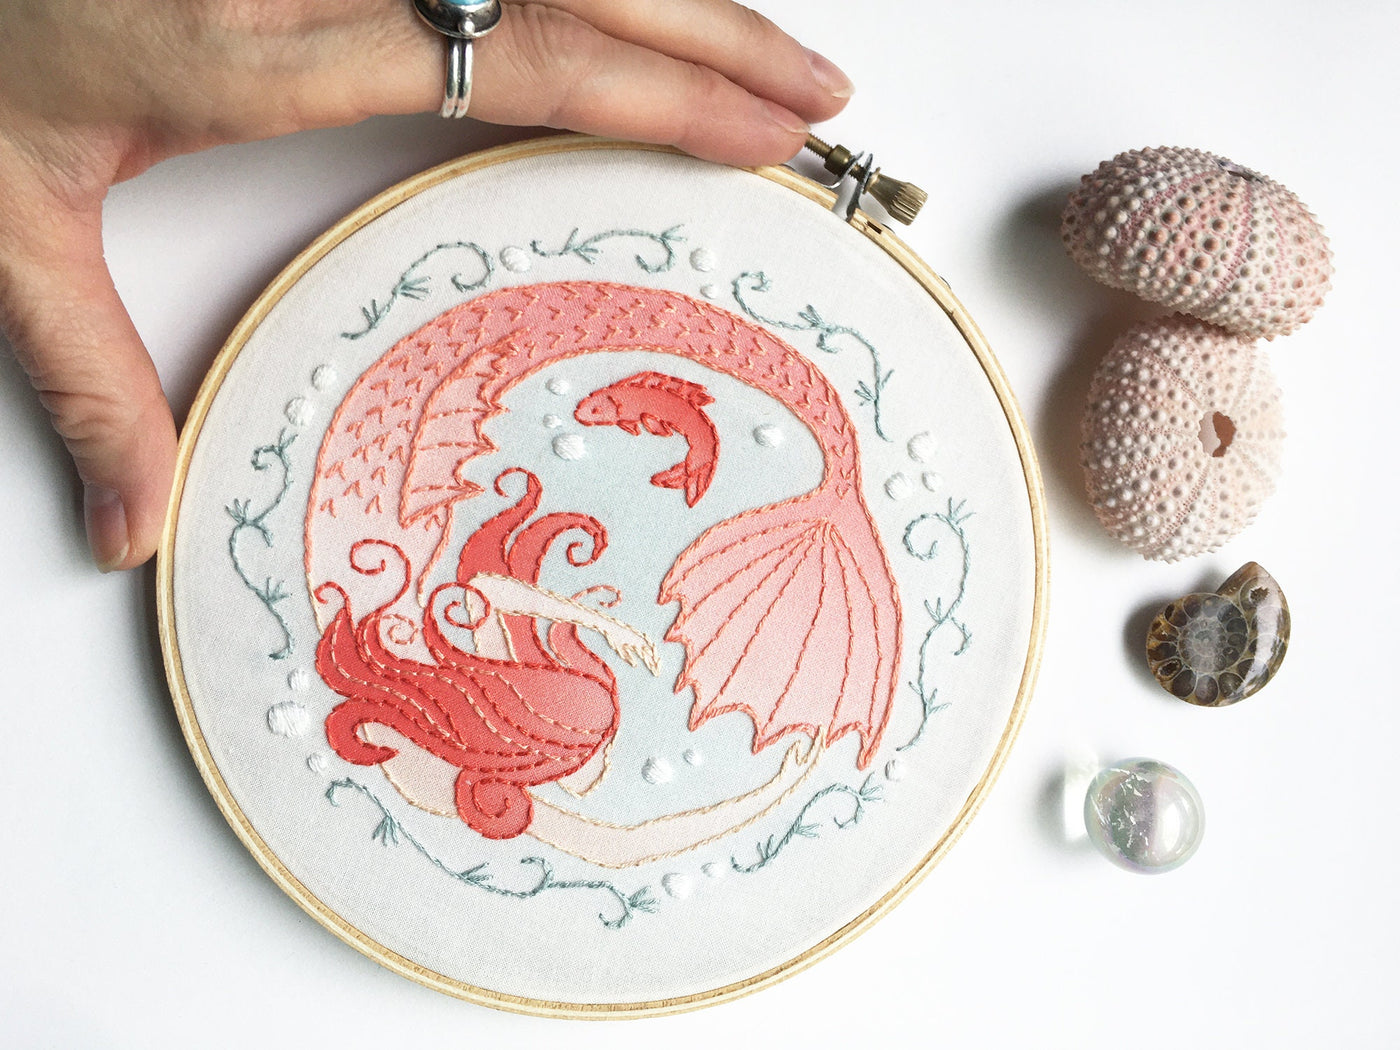 Mermaid Beginner Hand Embroidery pattern download